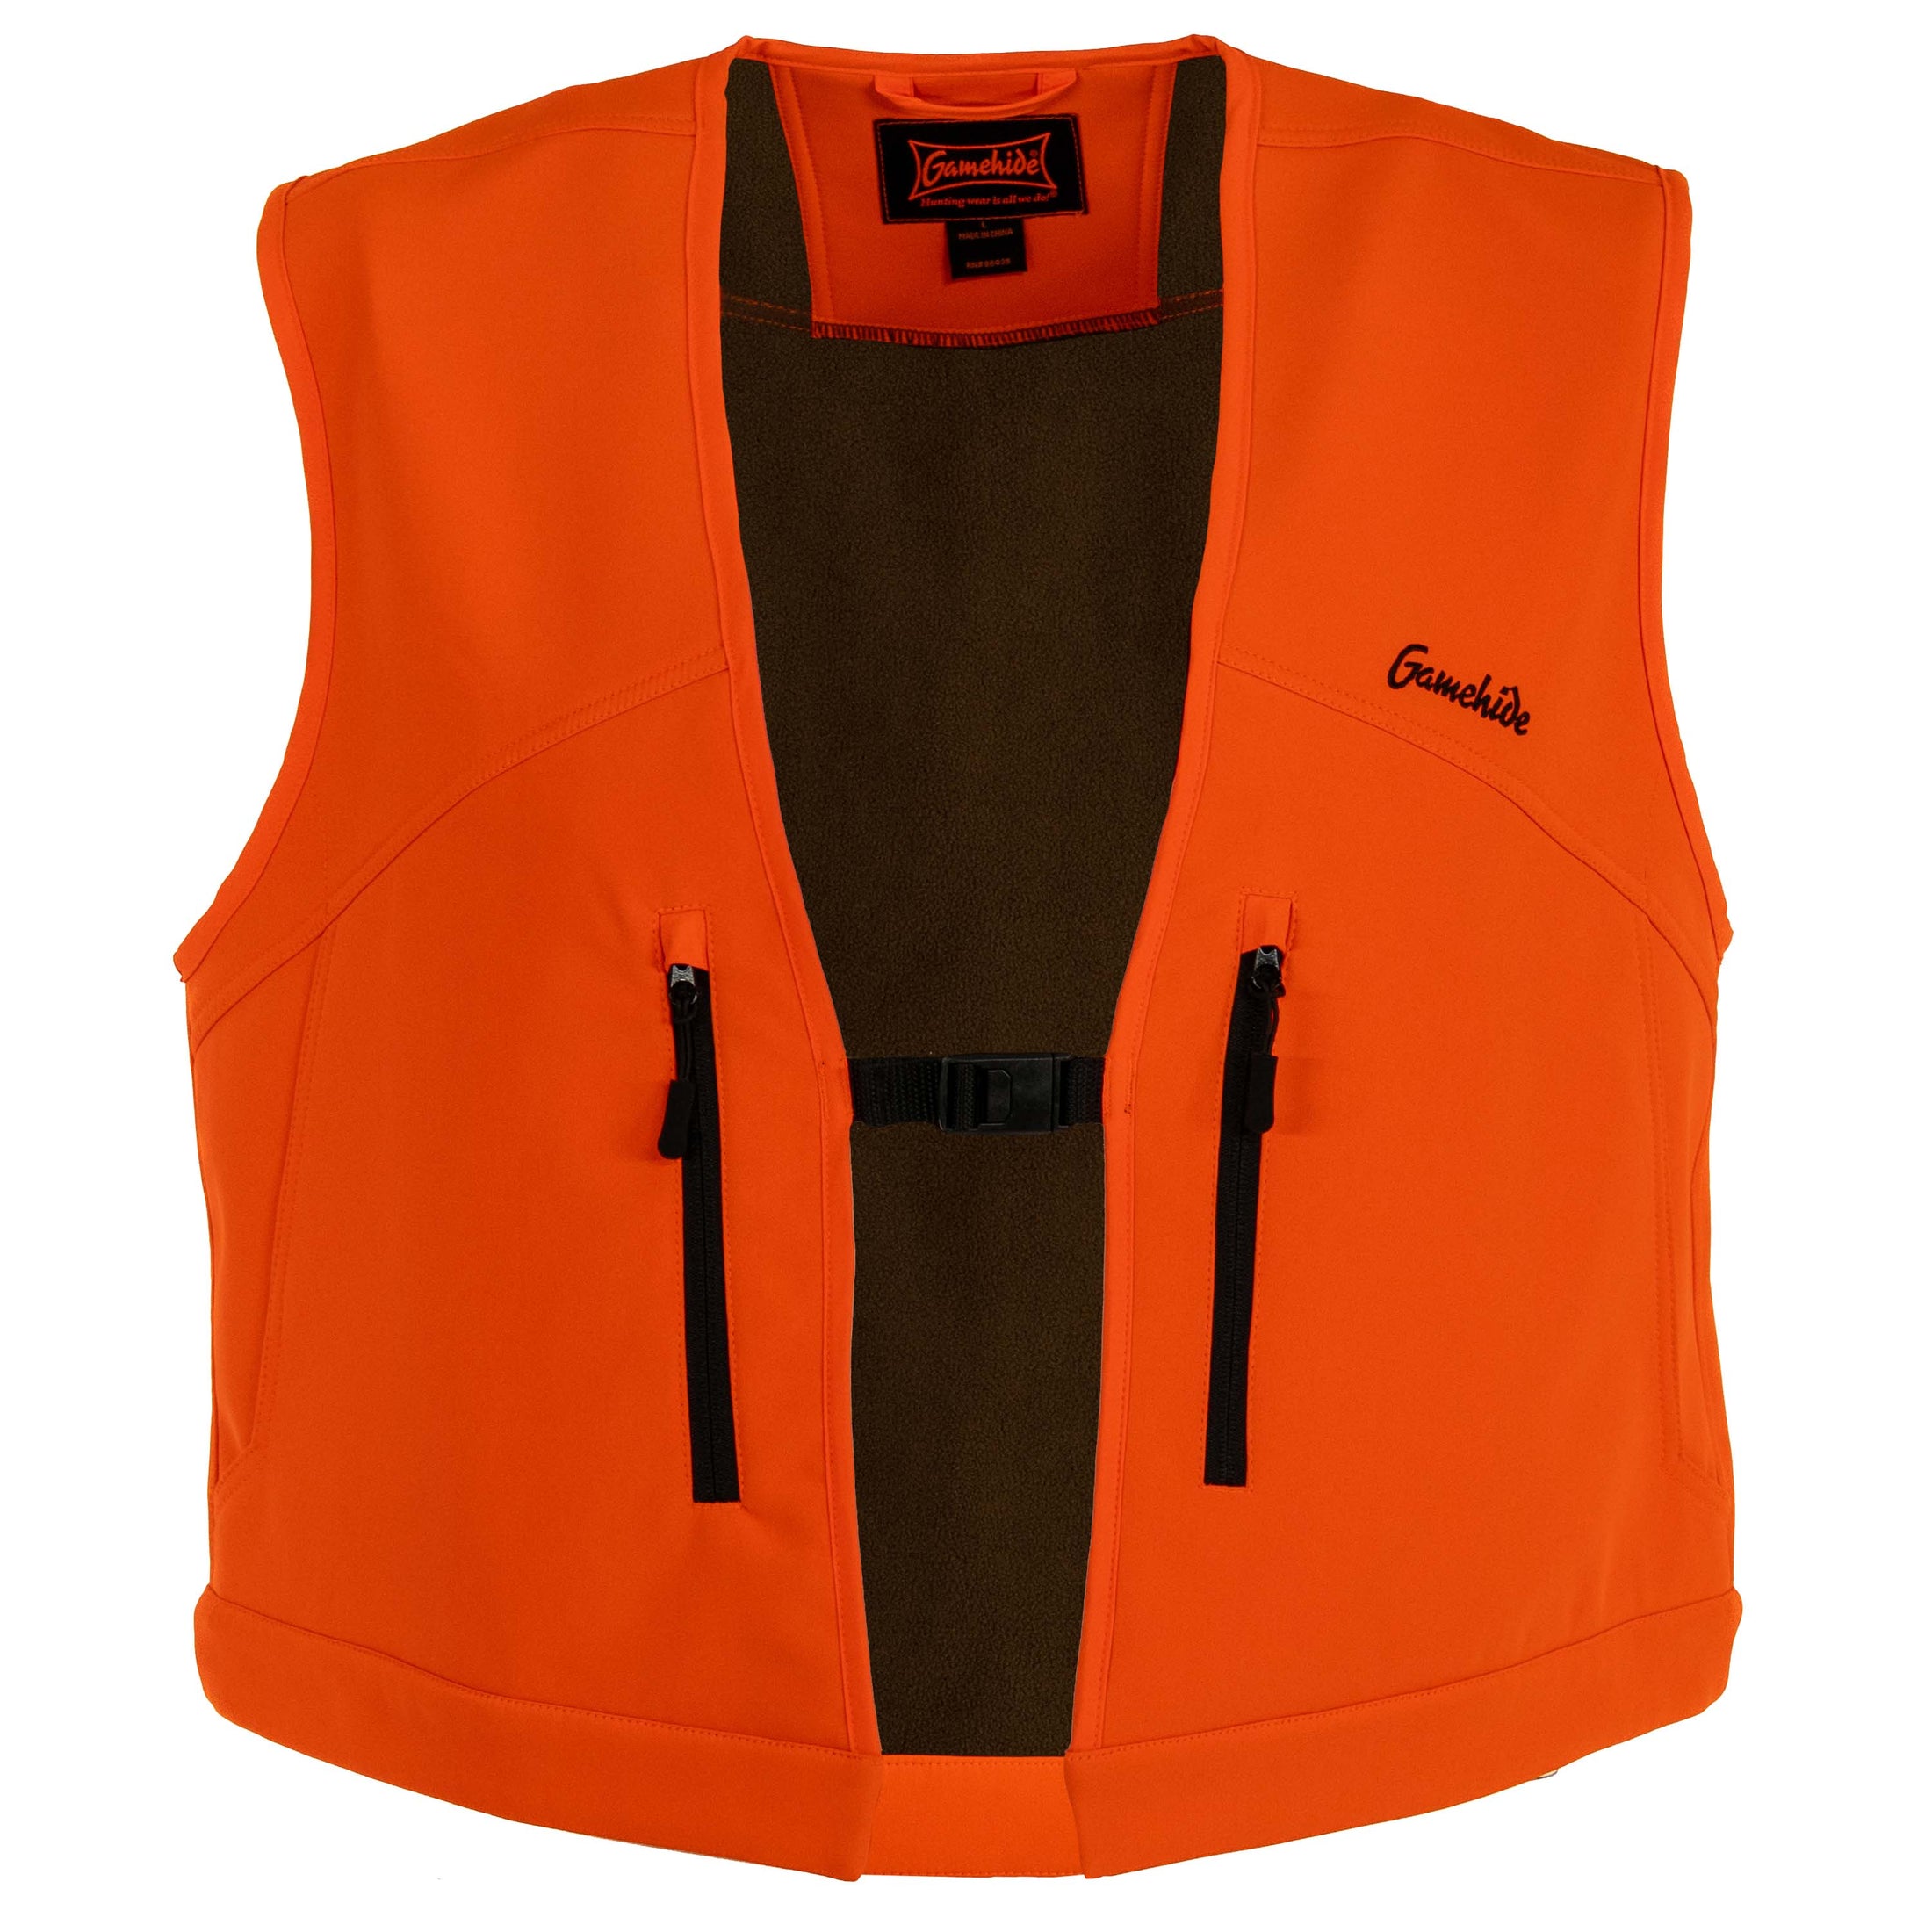 Open range vest - front view (Blaze orange)